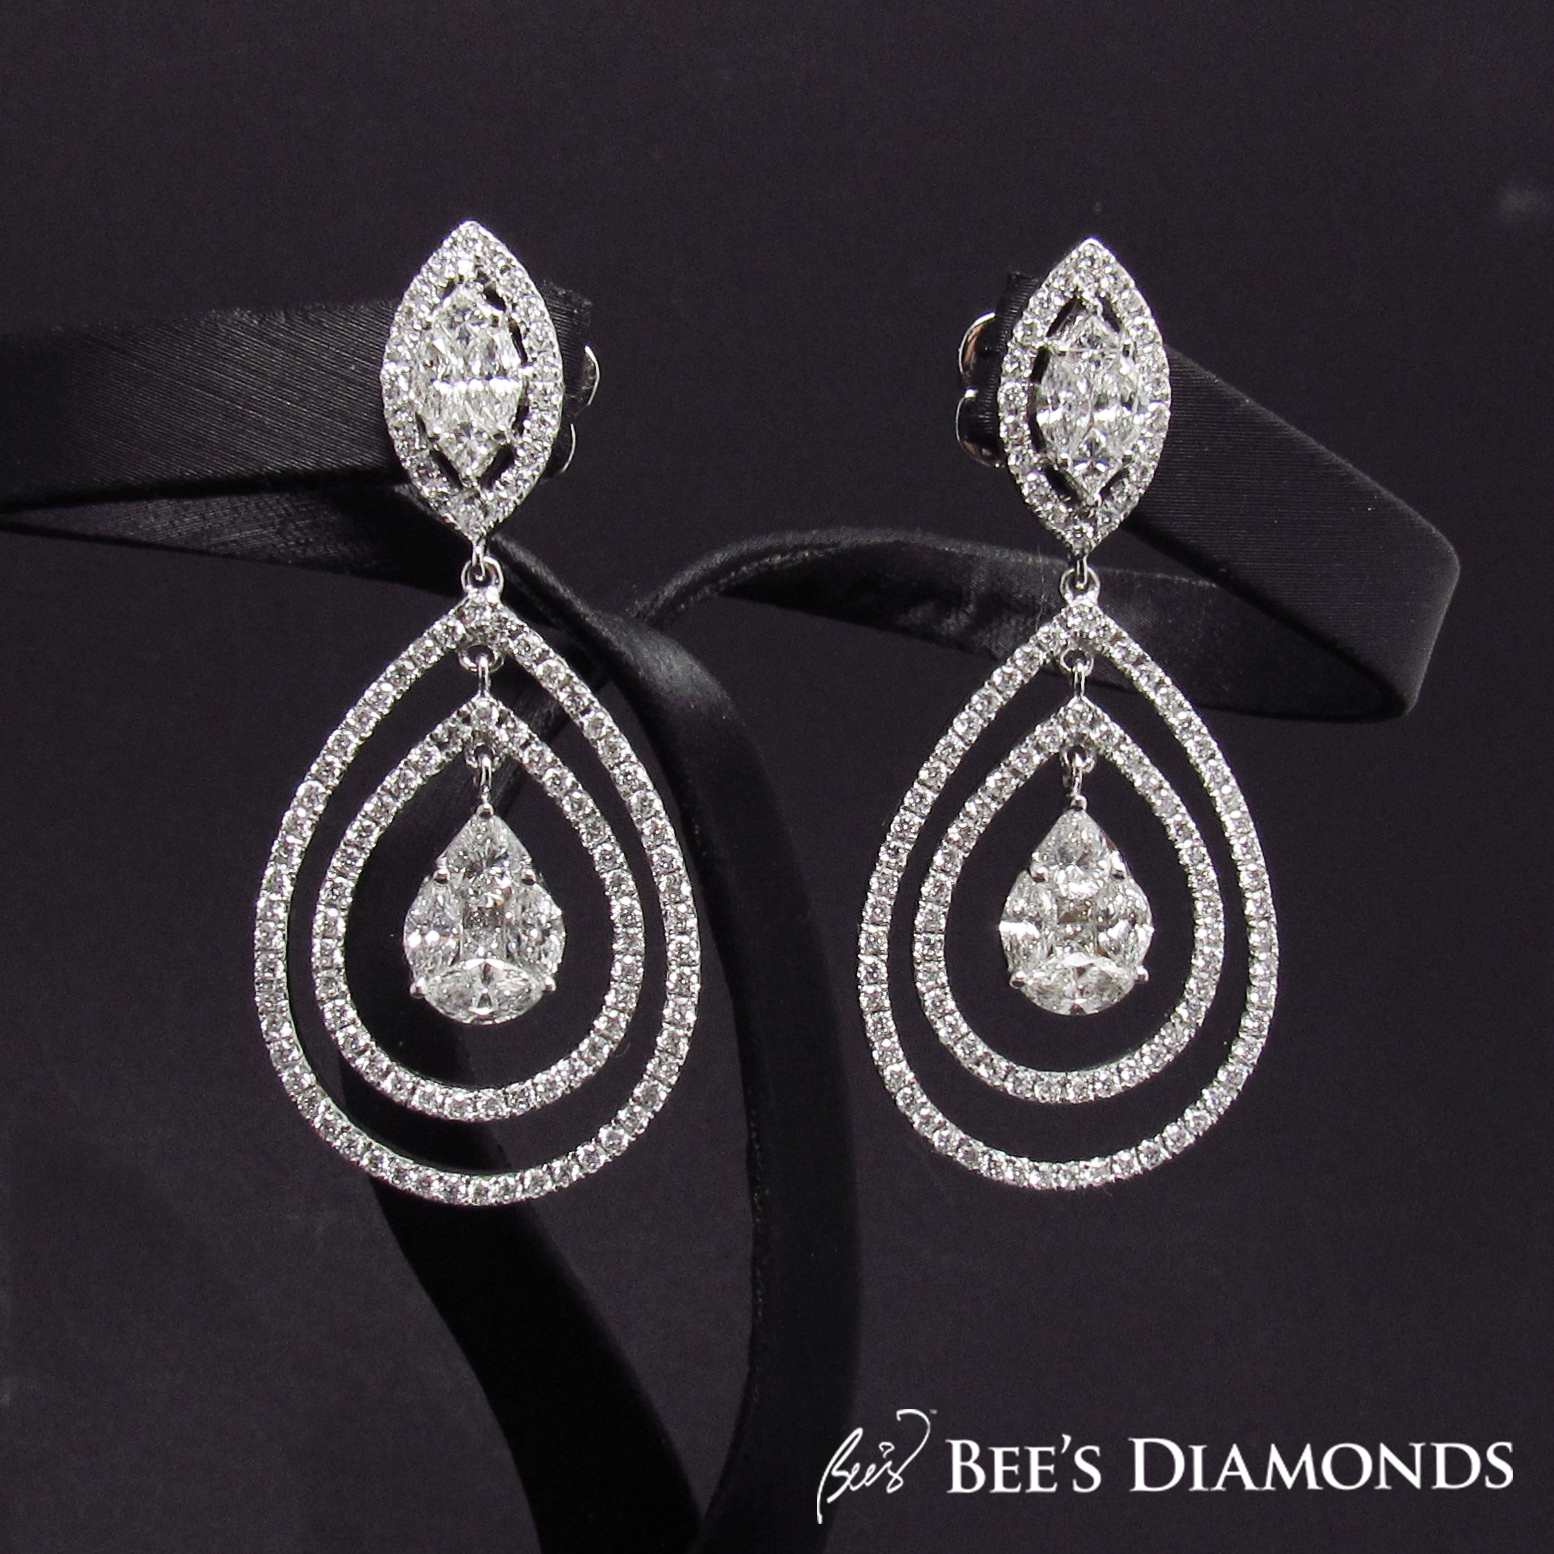 Invisible setting diamond earrings | Bee's Diamonds